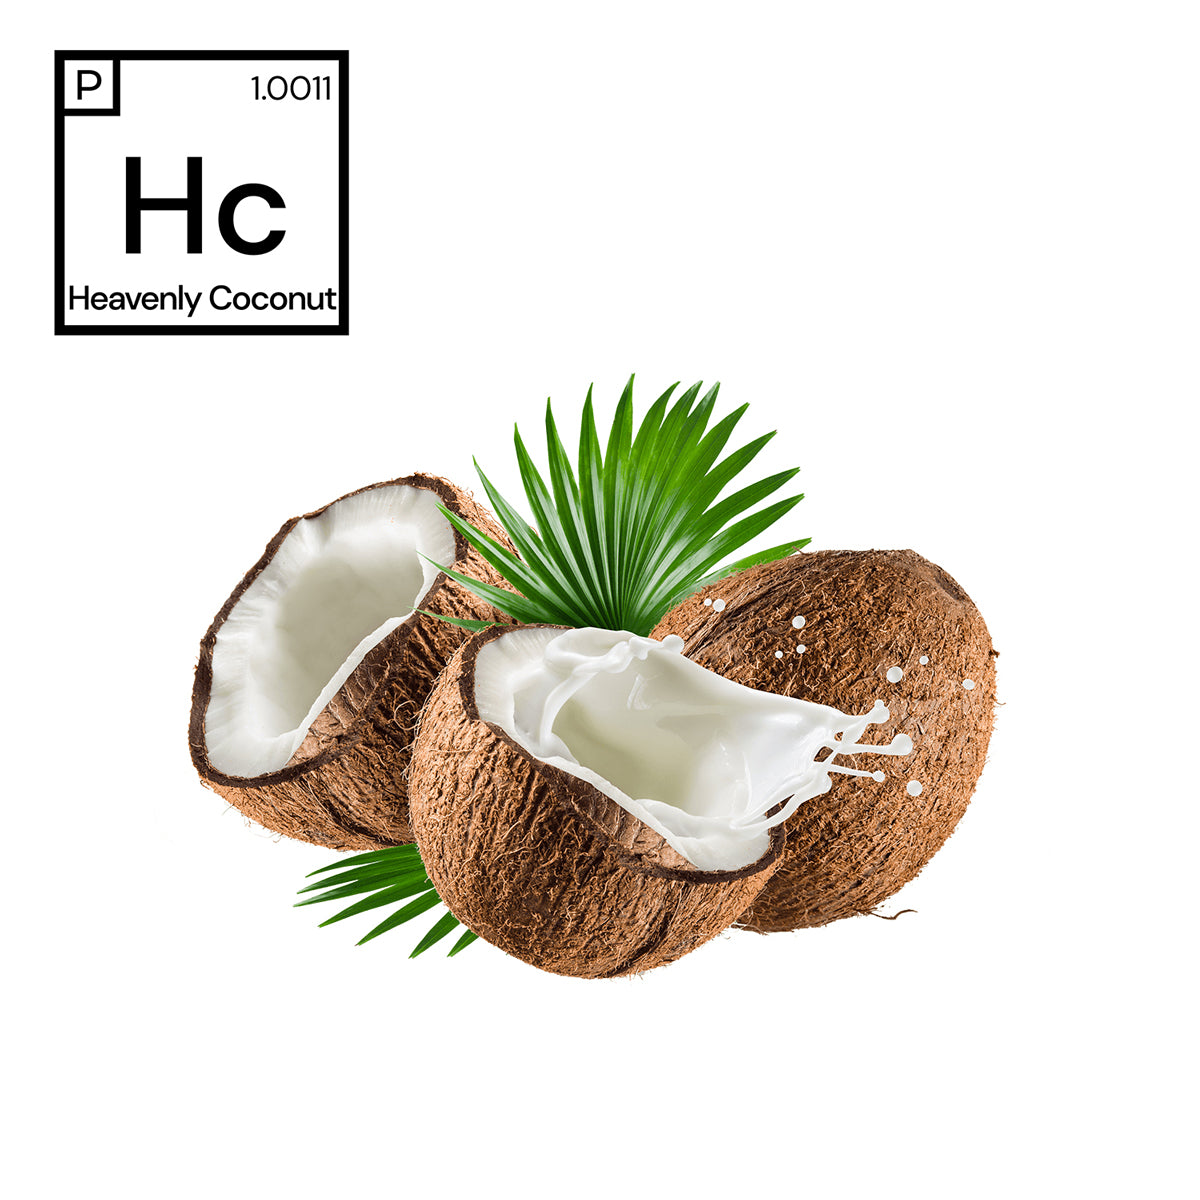 Heavenly Coconut Fragrance #1.0011